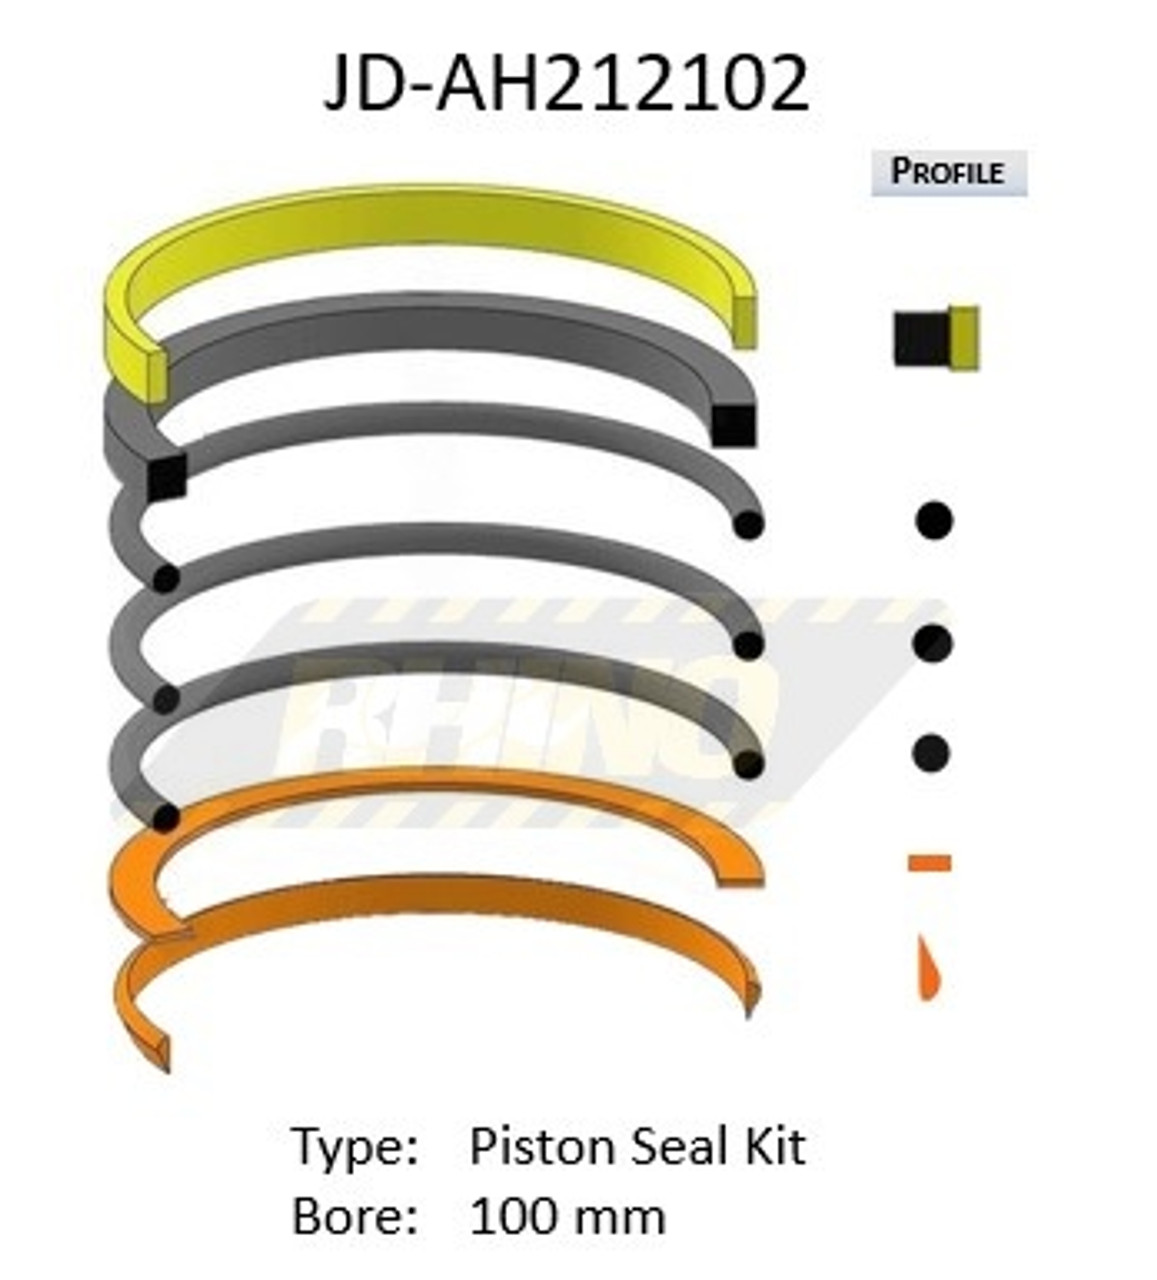 JD-AH212102, John Deere Seal Kit